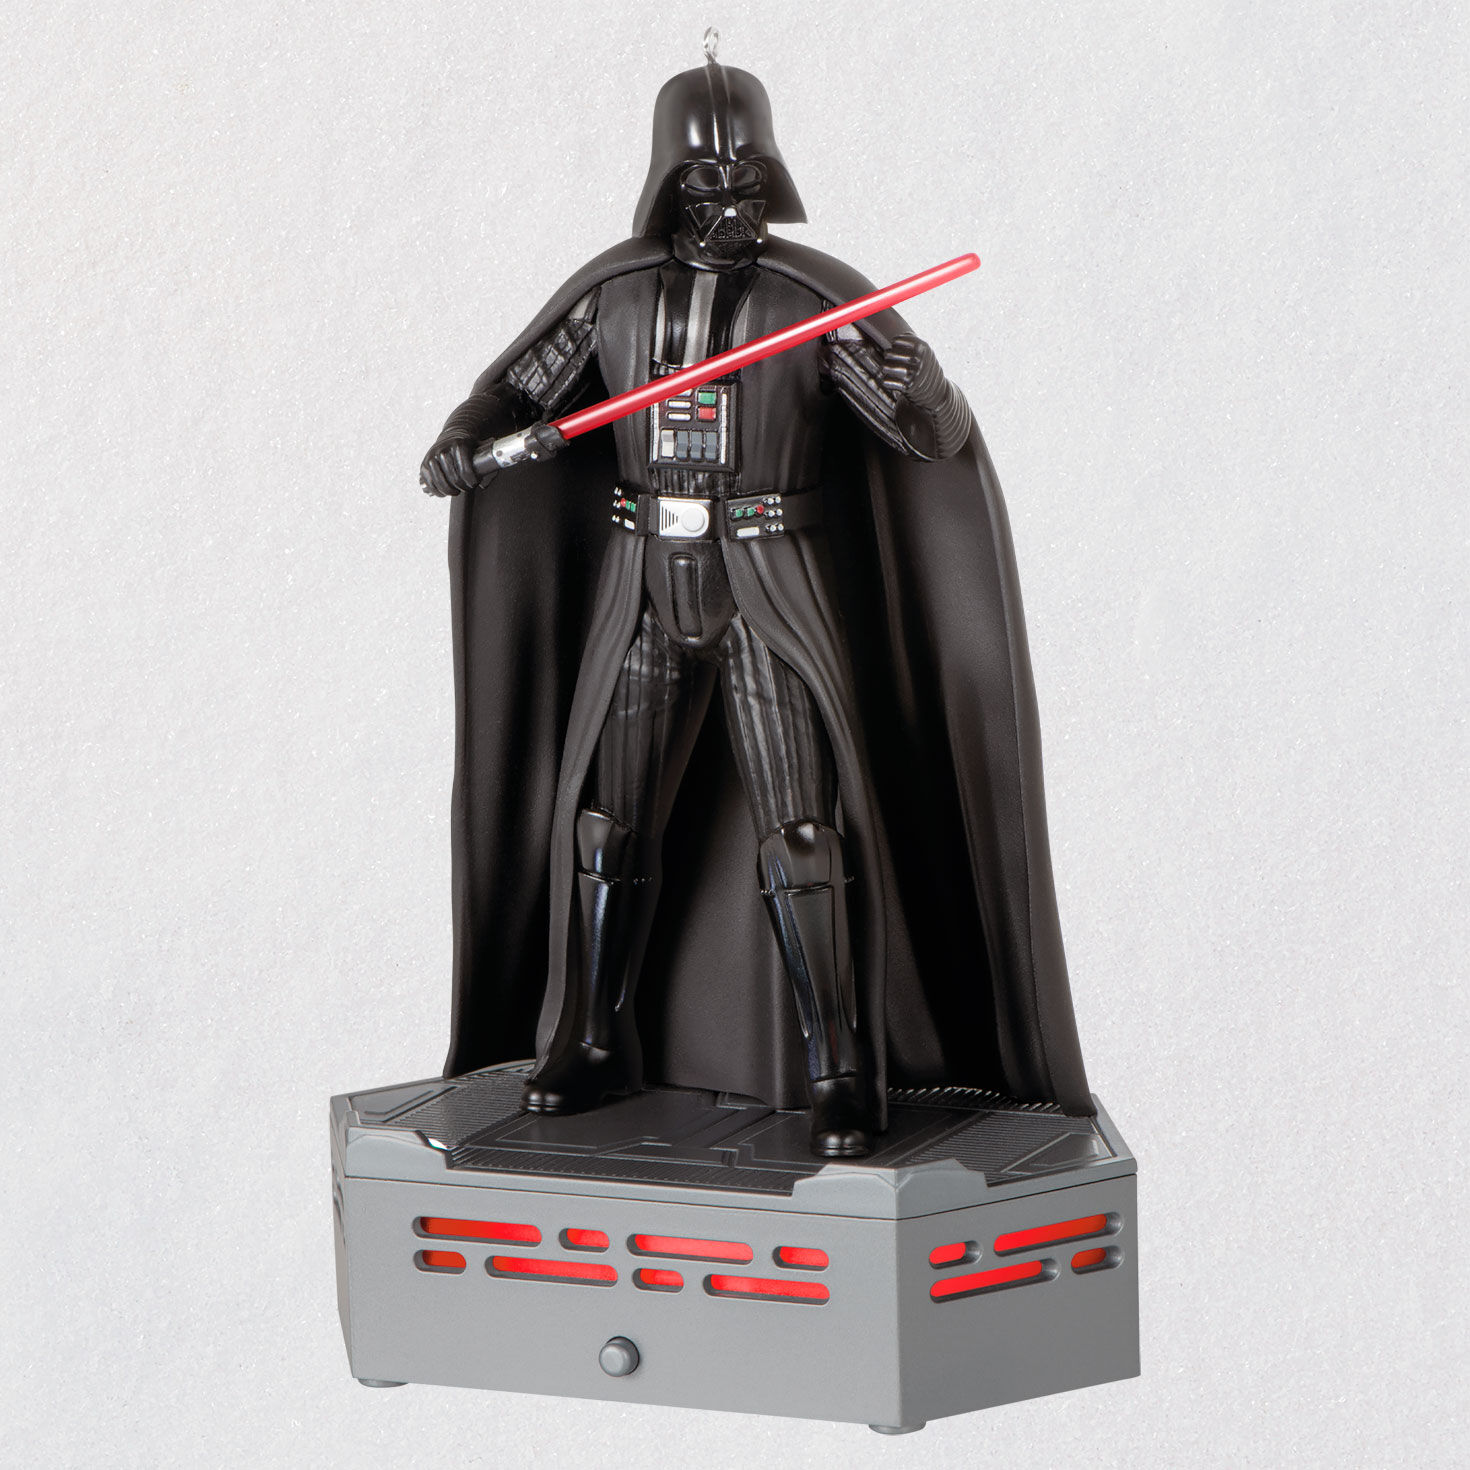 Lot 64 Pcs Lightsaber Accessory For Star Wars 3.75'' Skywalker Figure Toys gifts 